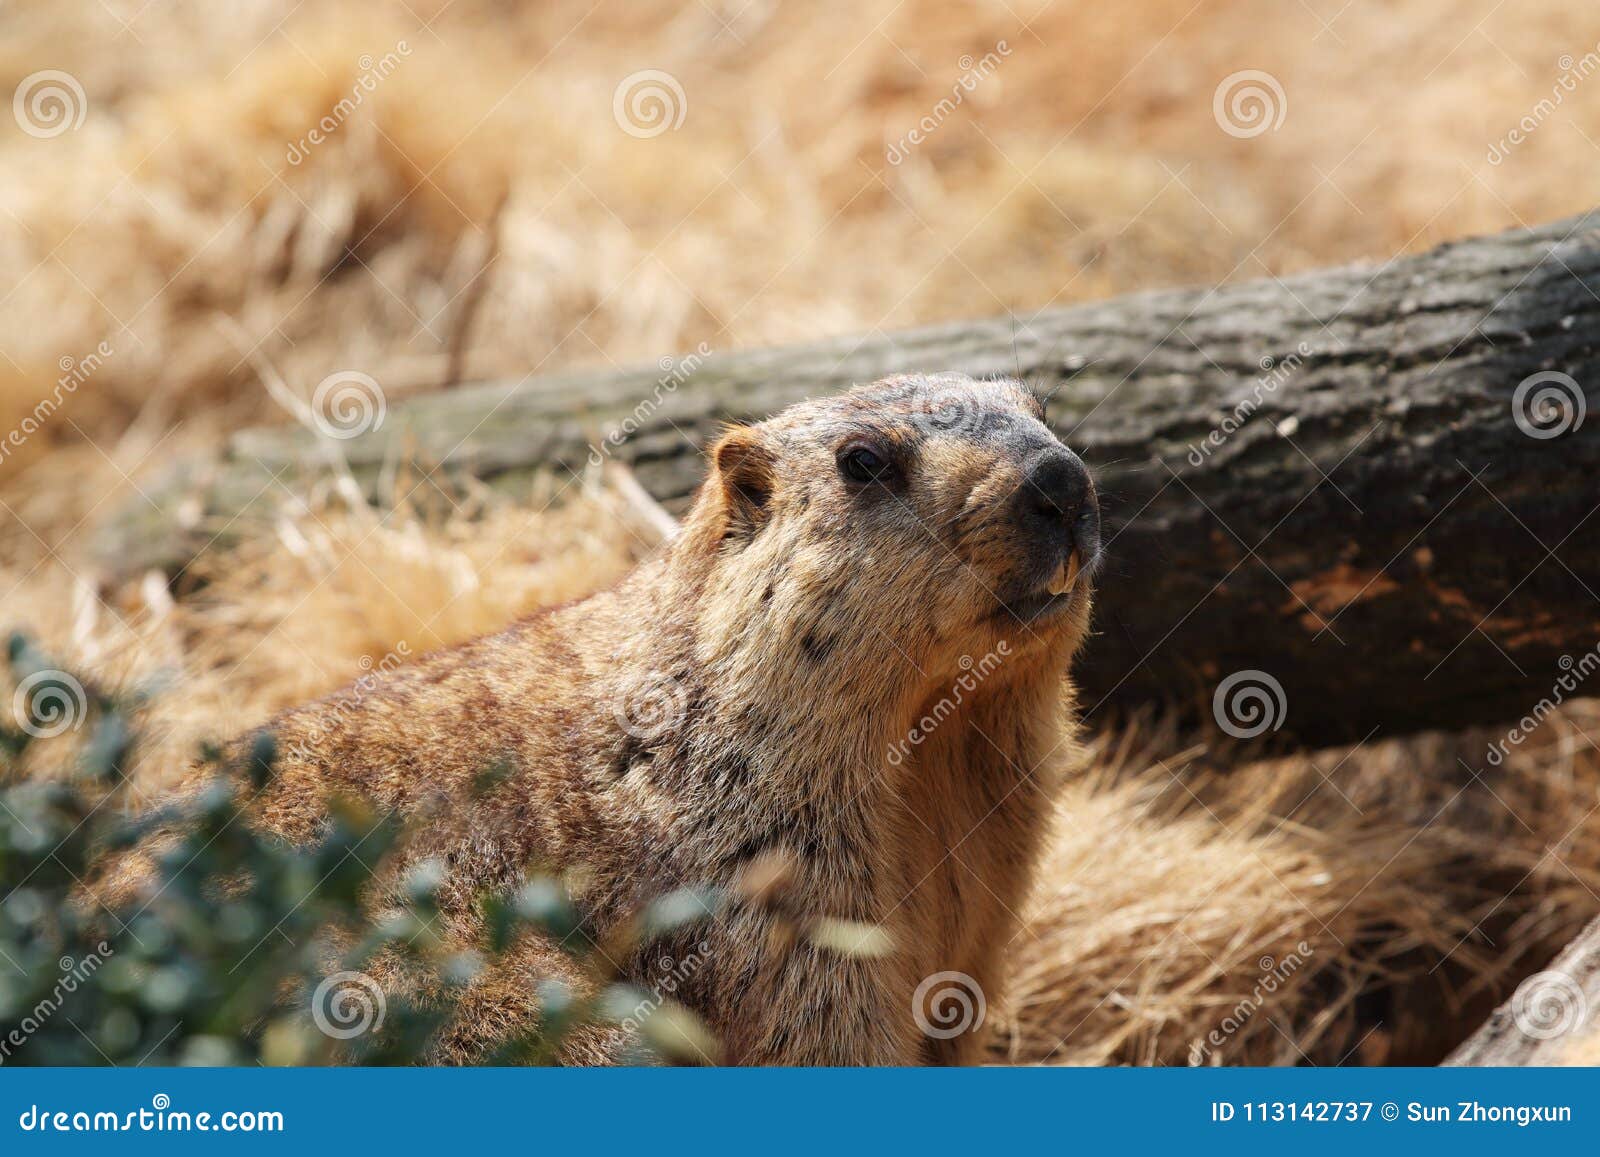 397 Hibernating Animal Stock Photos - Free & Royalty-Free Stock Photos from  Dreamstime